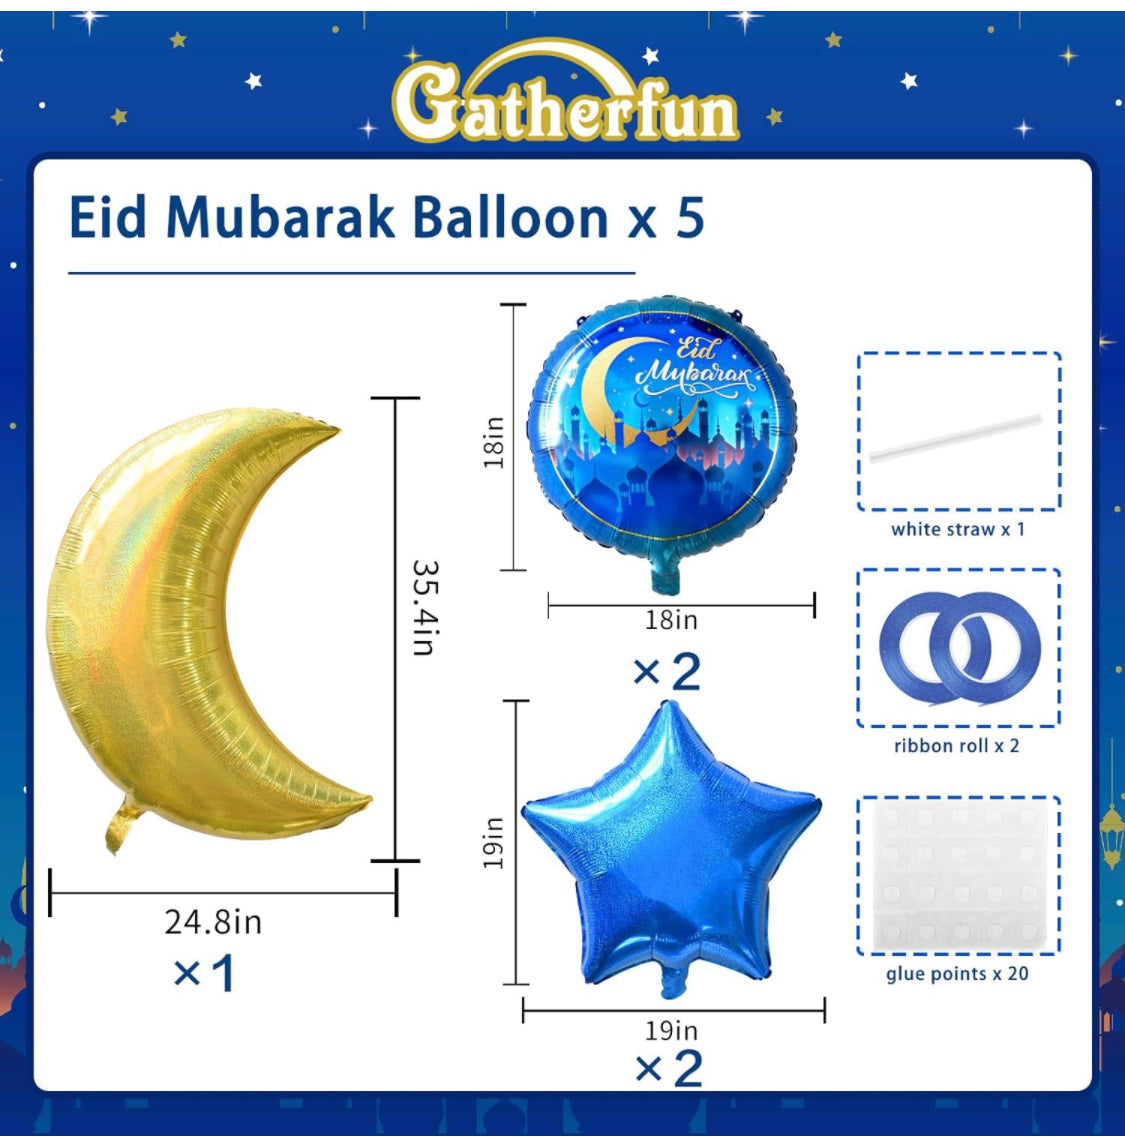 Eid Mubarak Party Decorations,Eid Mubarak Balloons for Ramadan and Eid Mubarak Party Decoration Supplies